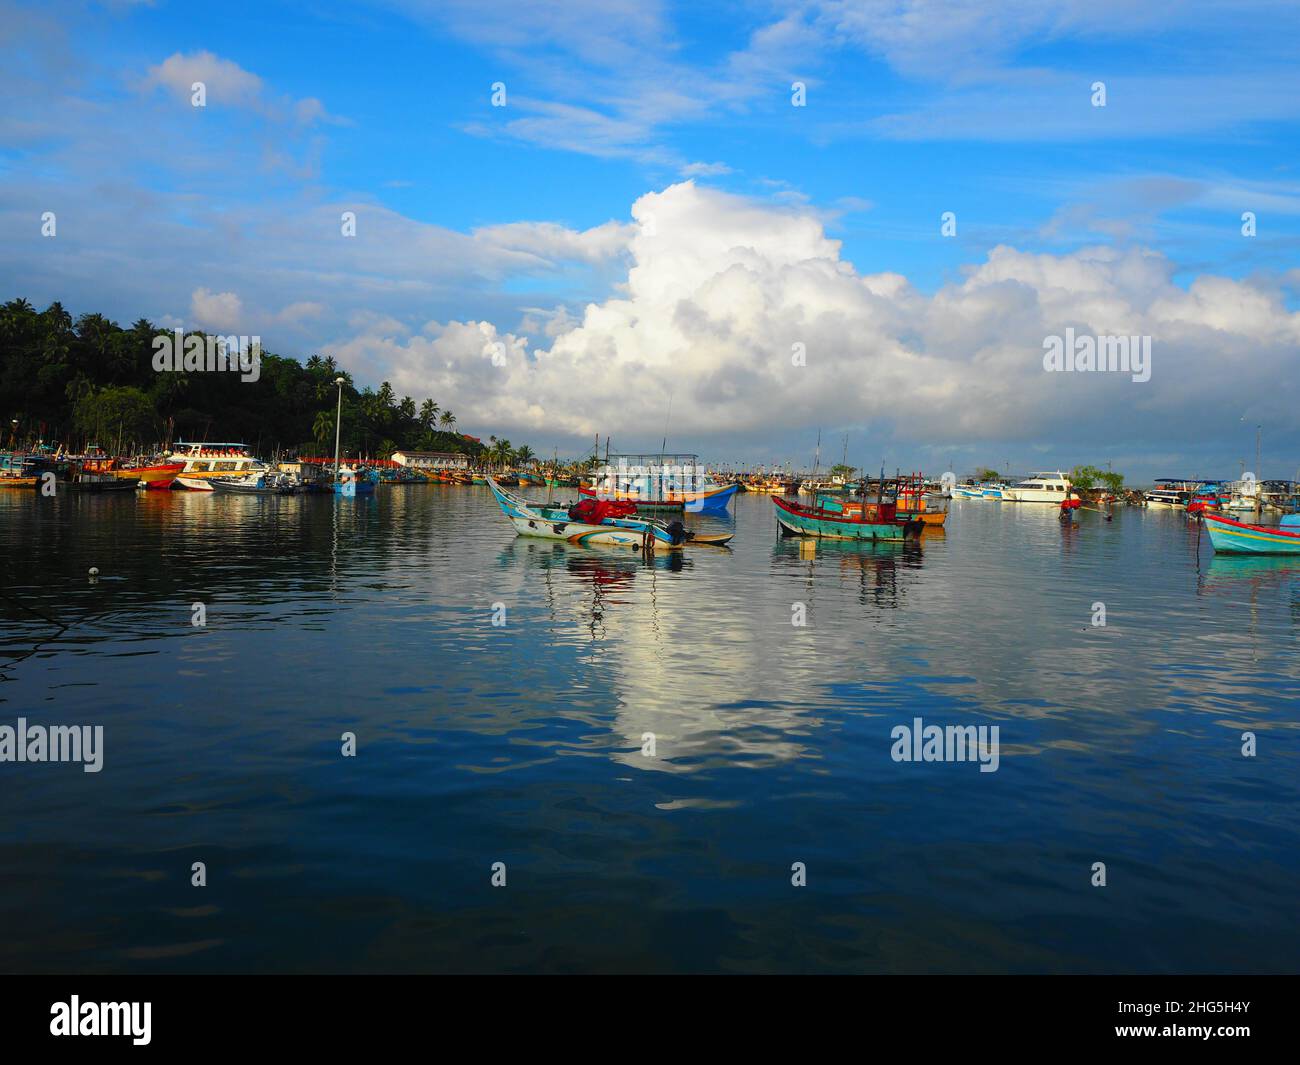 Bunte einheimische Fischerboote, Strand & Ozean Südostasien #Asien #aroundtheworld #SouthEastAsia #SriLanka #Hinterland #Authentic #fernweh #Slowtravel Stockfoto